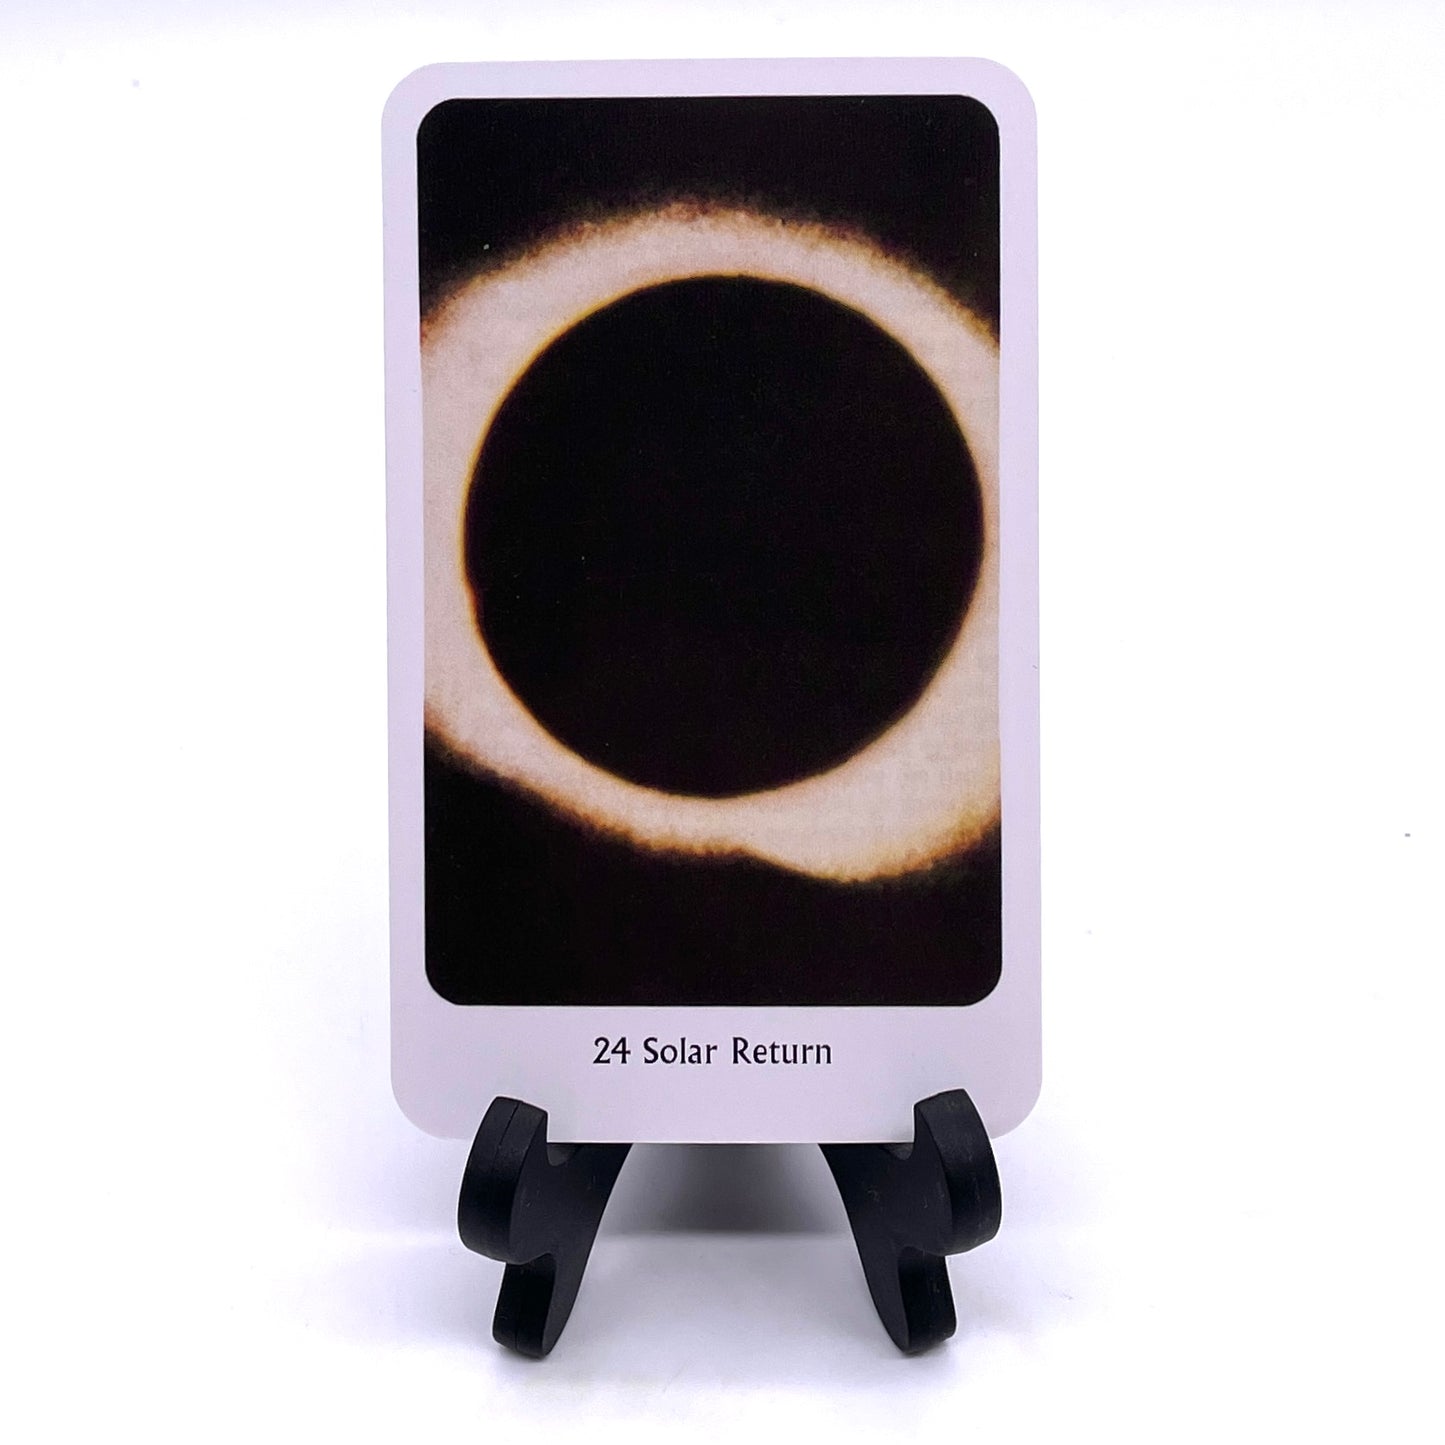 Photo of Card #24 "Solar Return" featuring a solar eclipse.